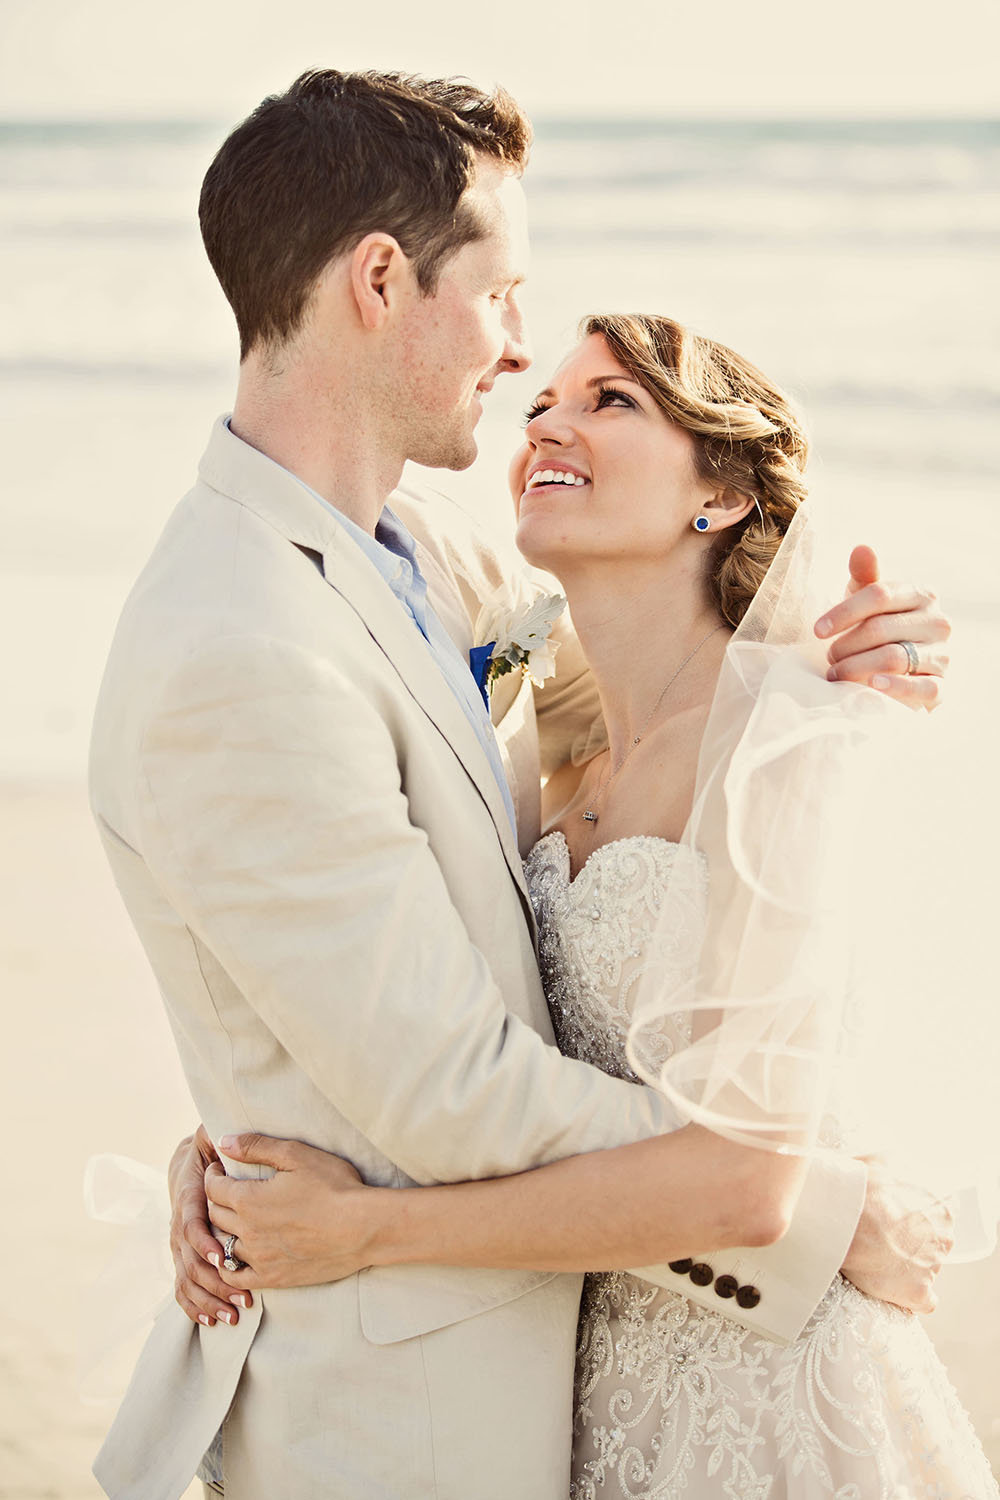 Top 10 beach wedding portrait ideas